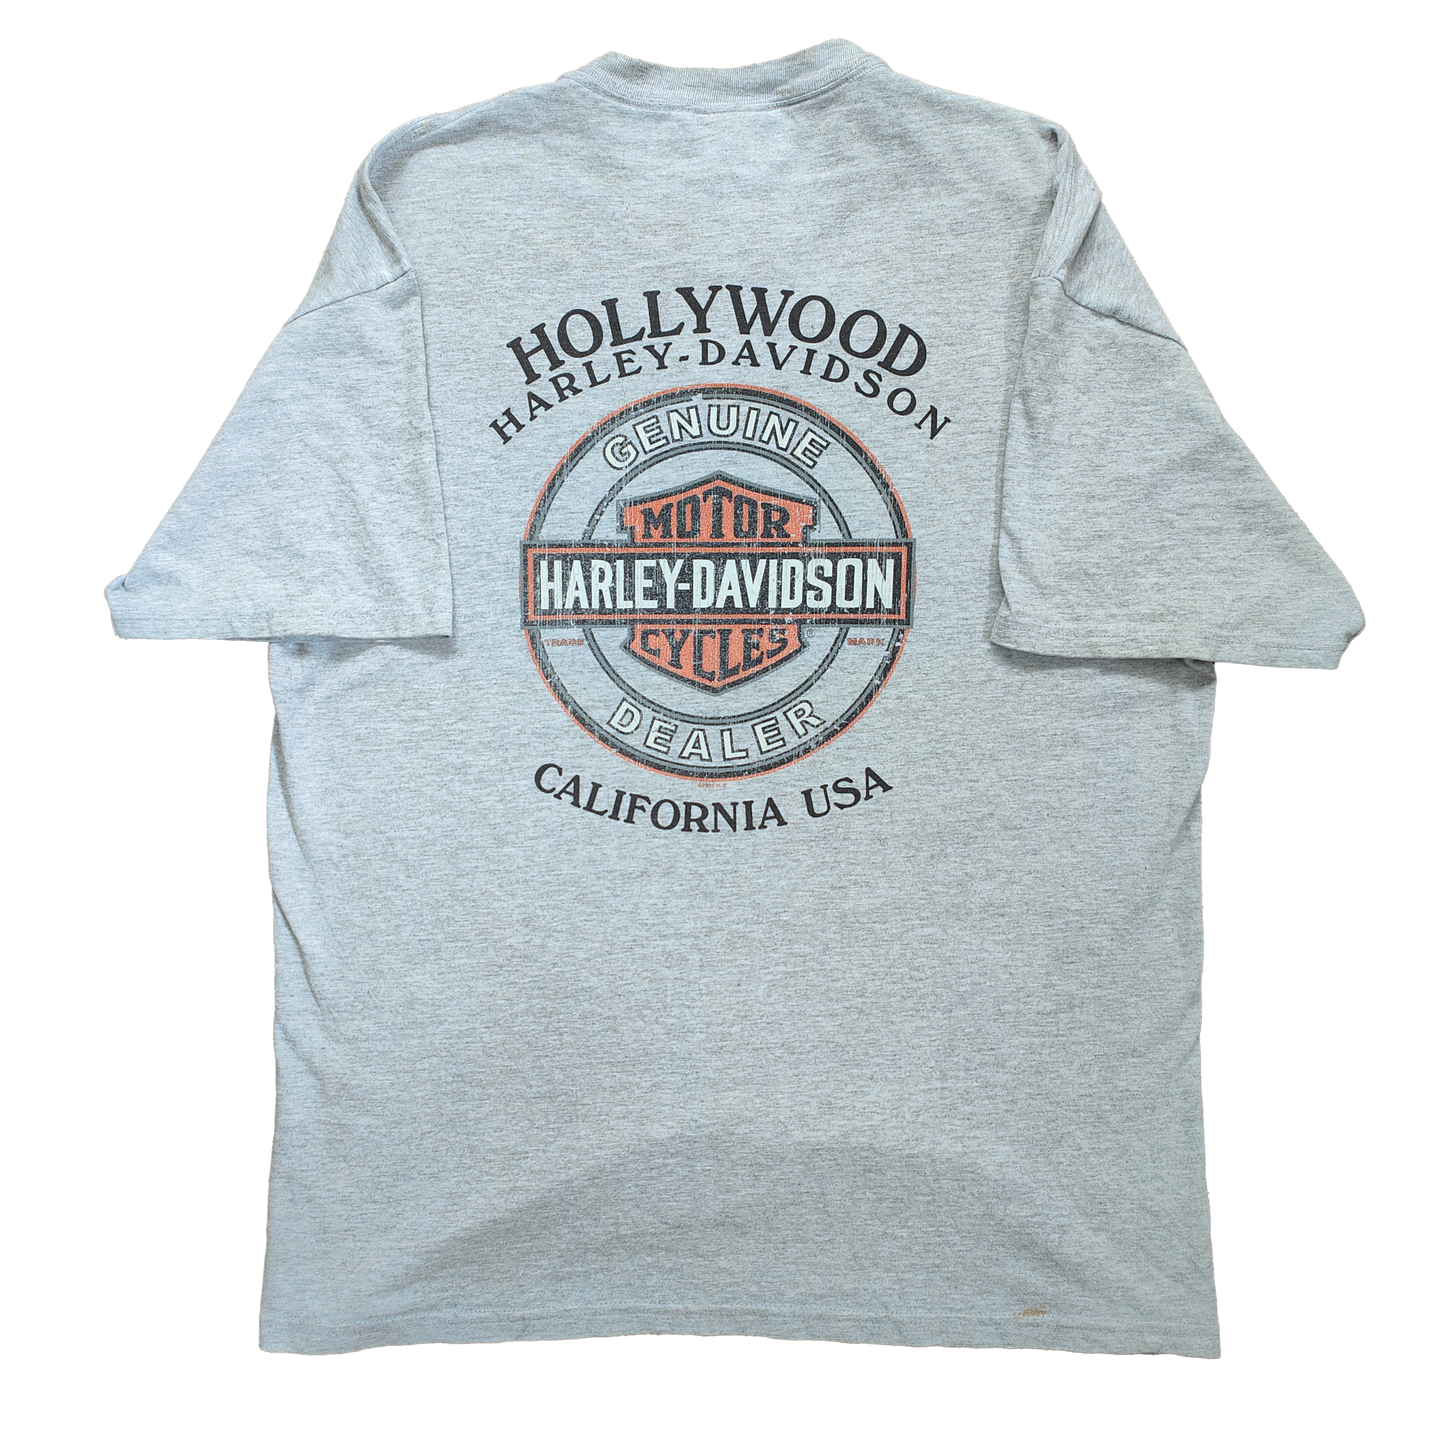 Harley Davidson Hollywood 2007 T Shirt  - XL